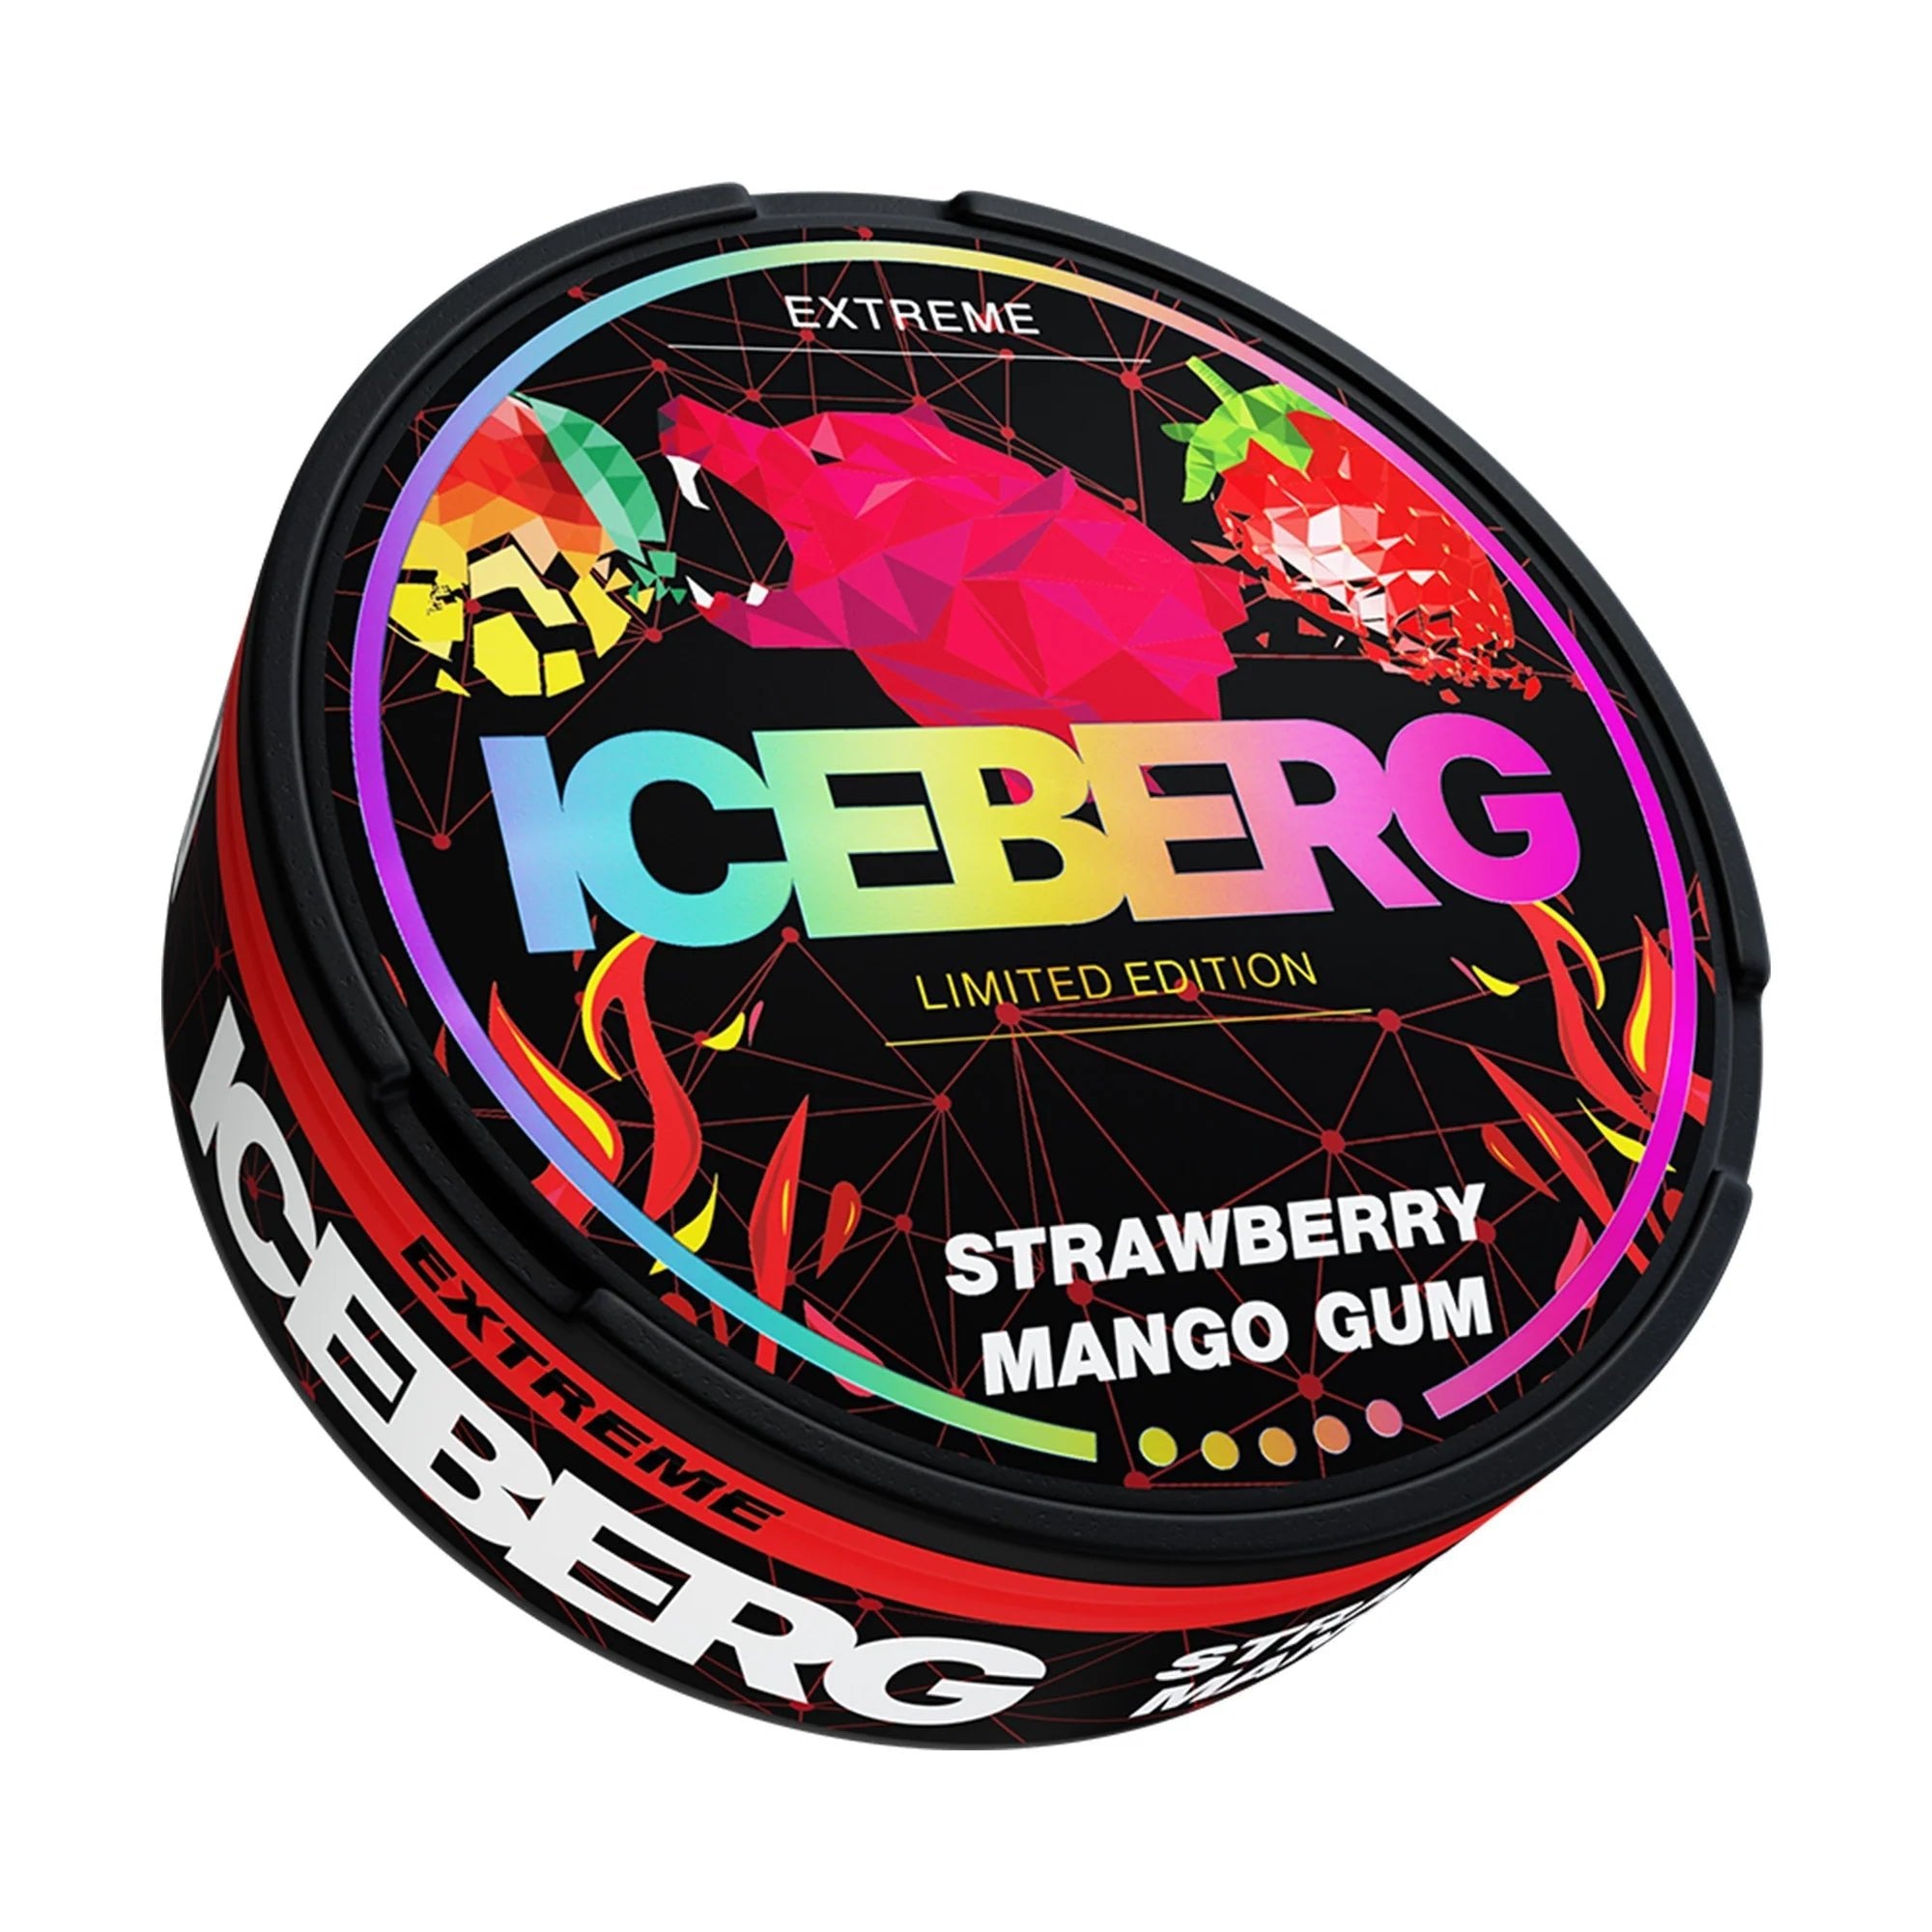 Iceberg Strawberry Mango Gum - EUK